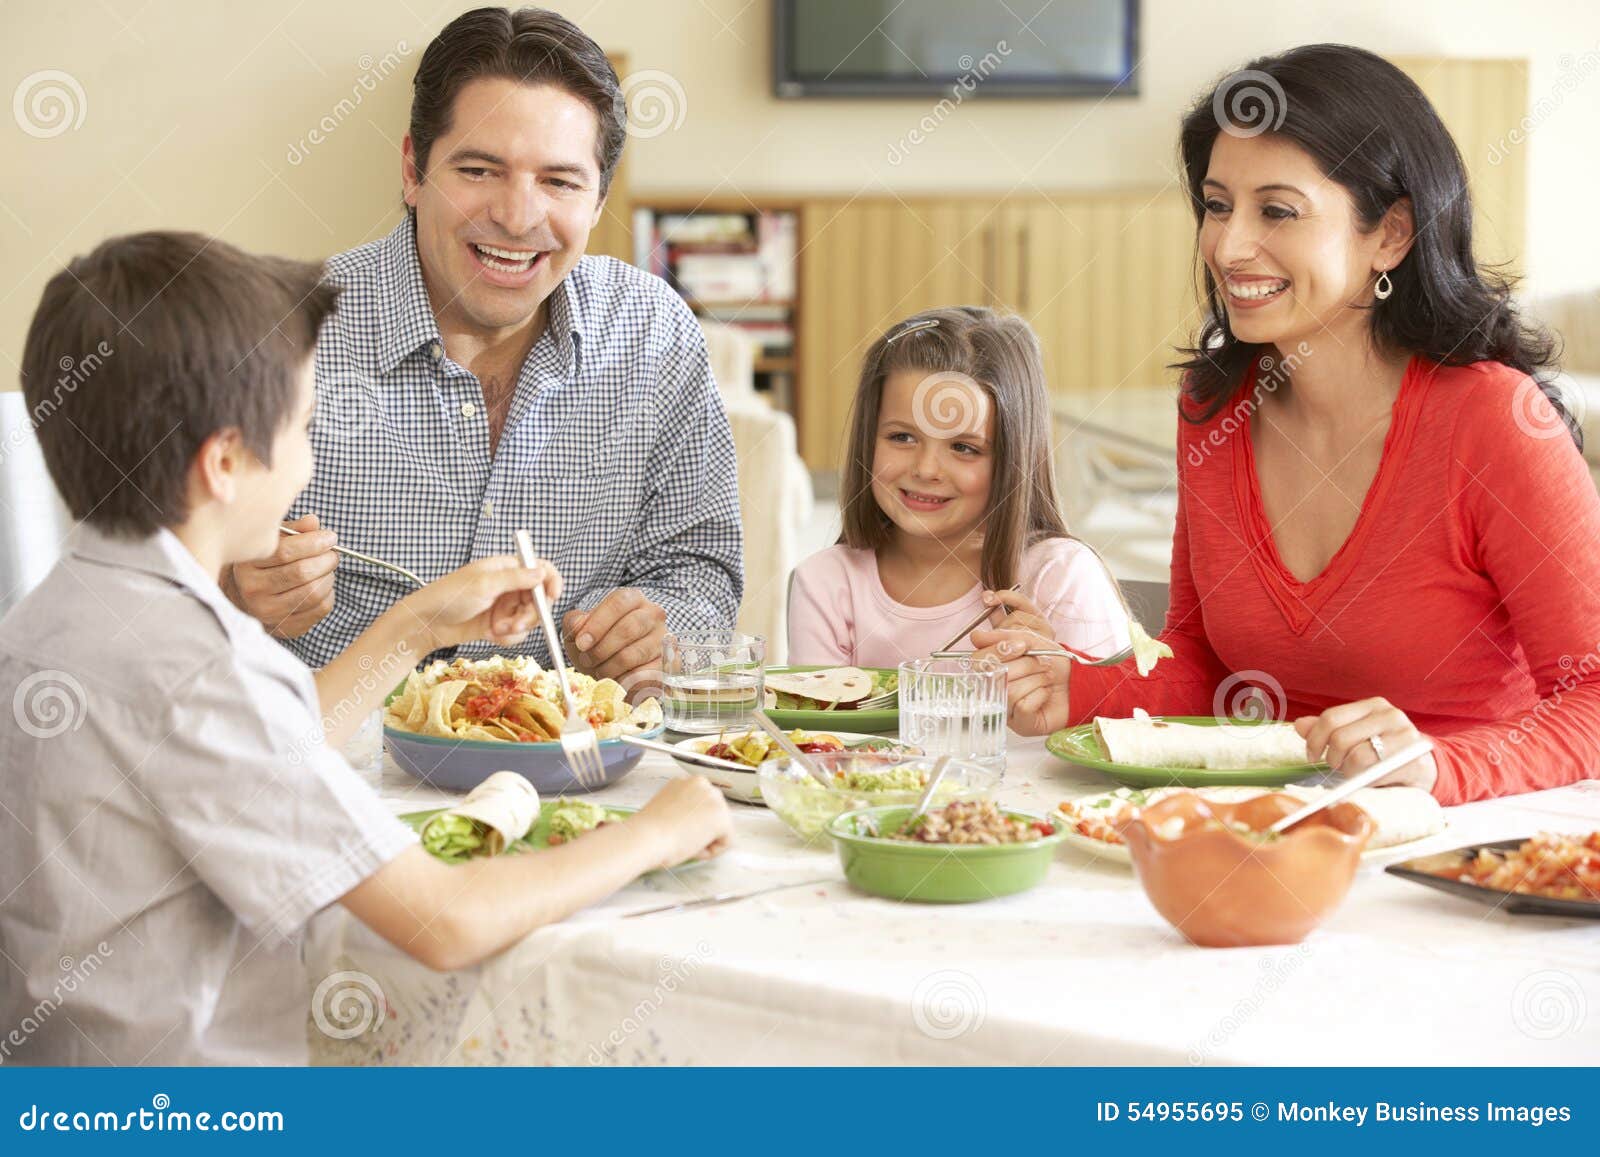 young hispanic family enjoying meal at home